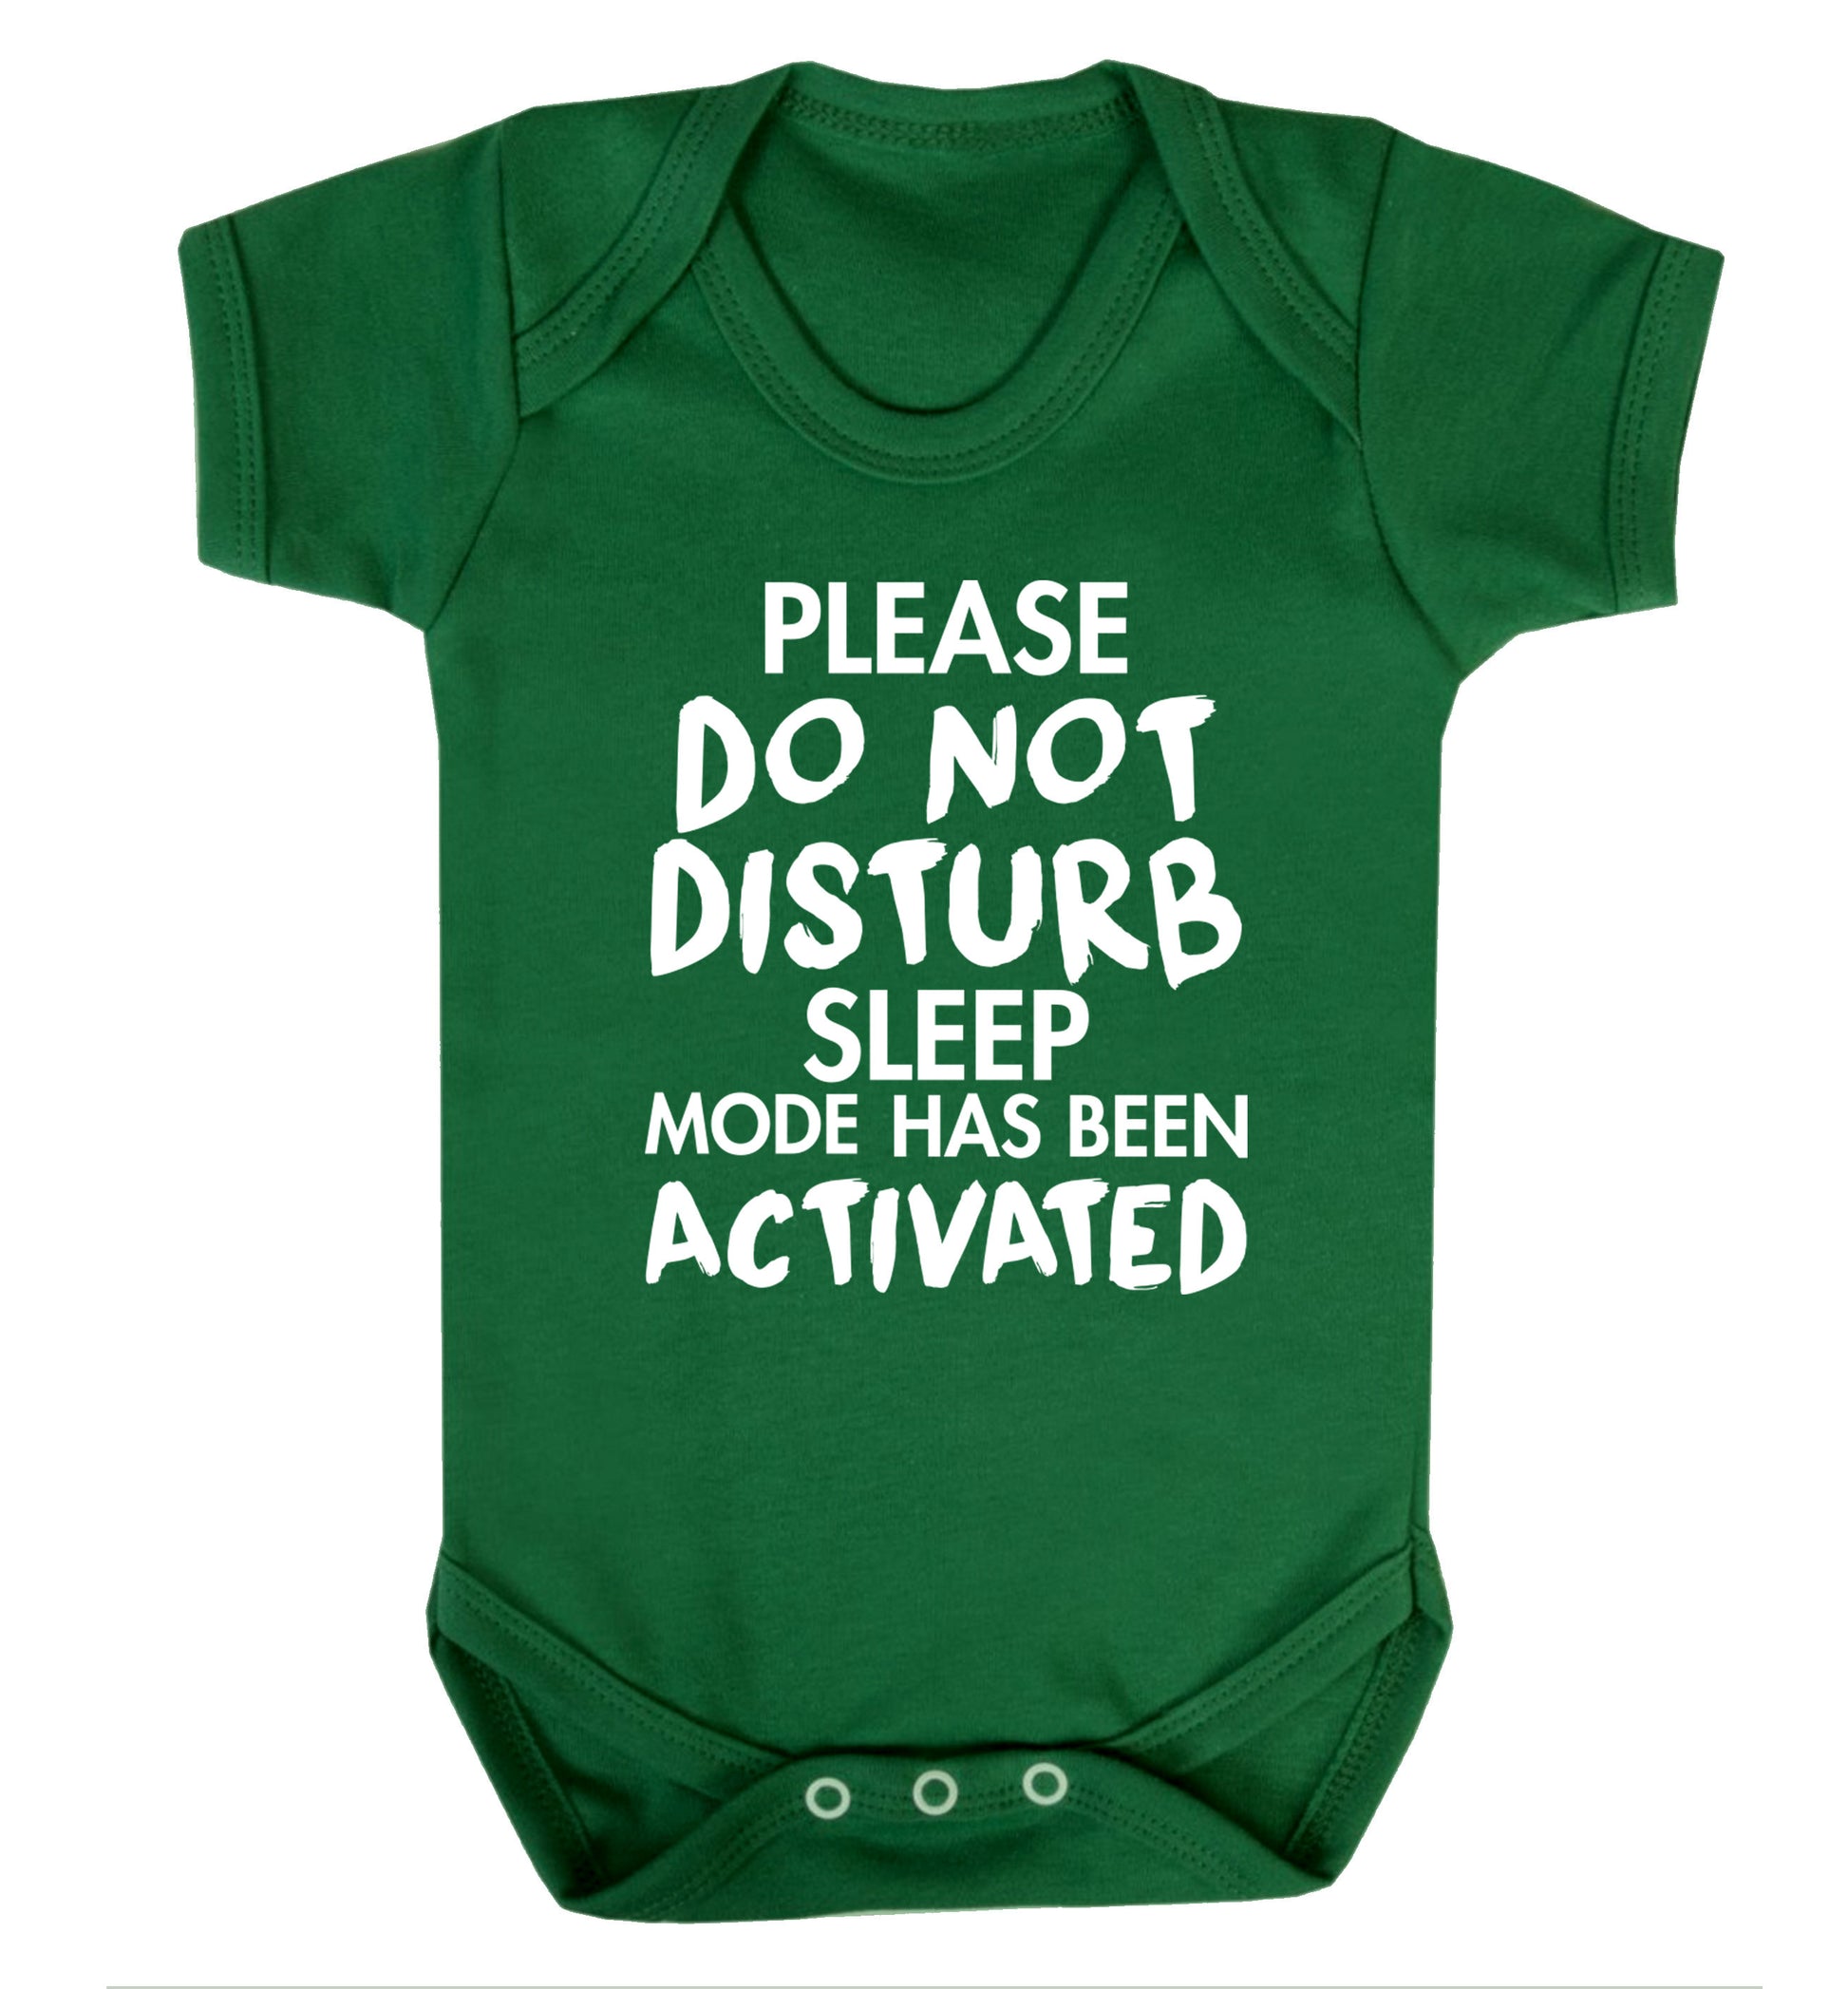 Please do not disturb sleeping mode has been activated Baby Vest green 18-24 months